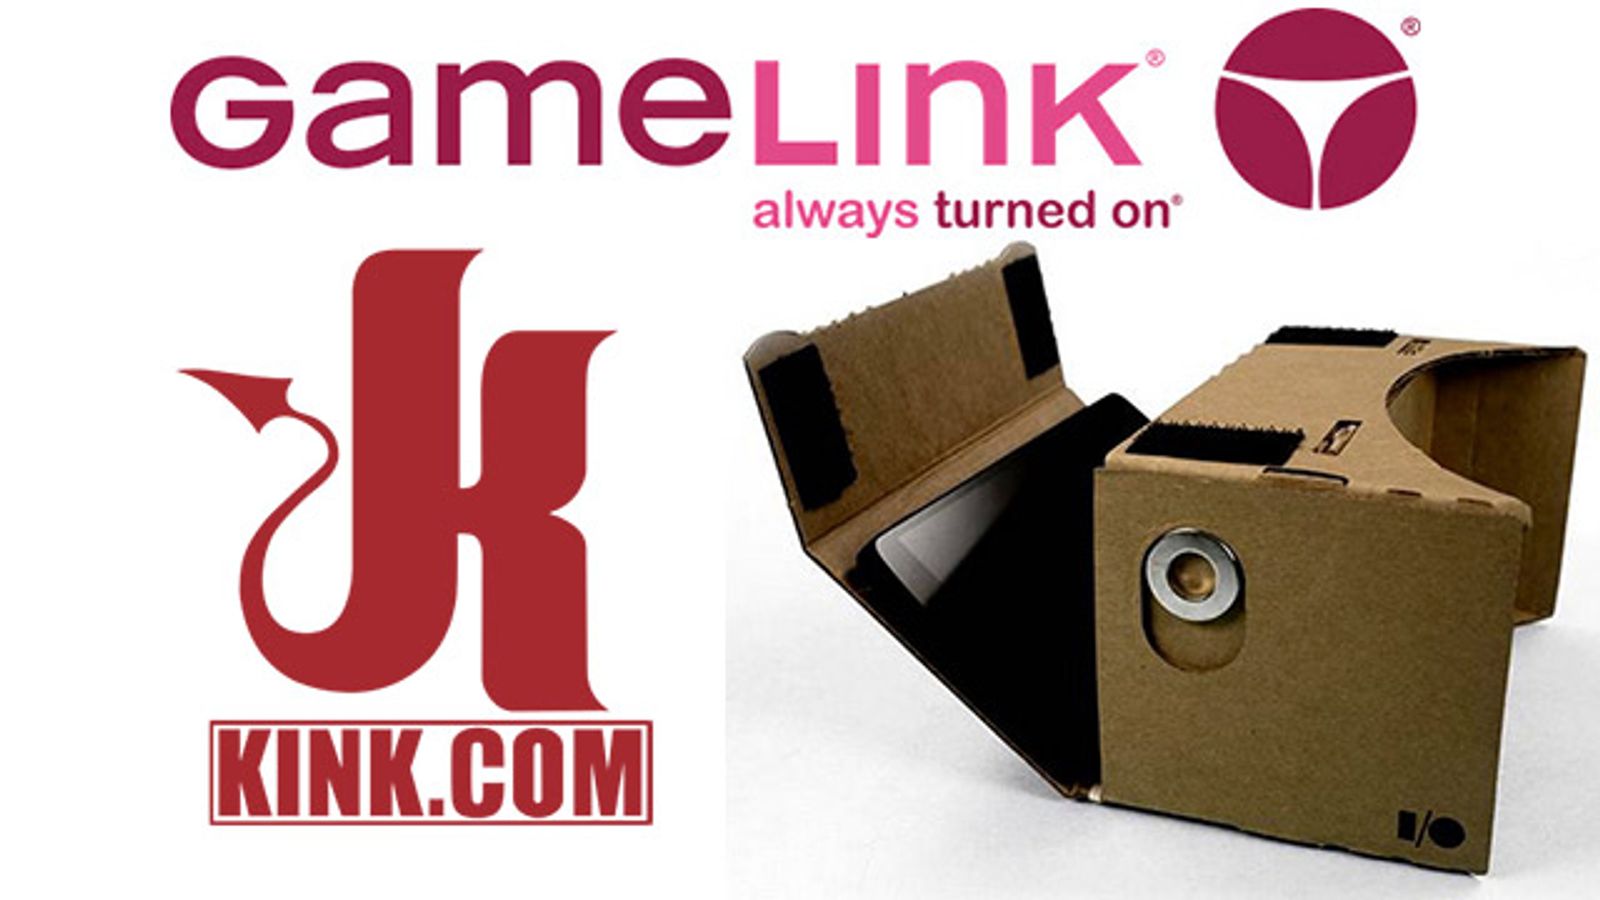 GameLink, Kink To Discuss, Demo VR At Traffic Jam 2016 Event